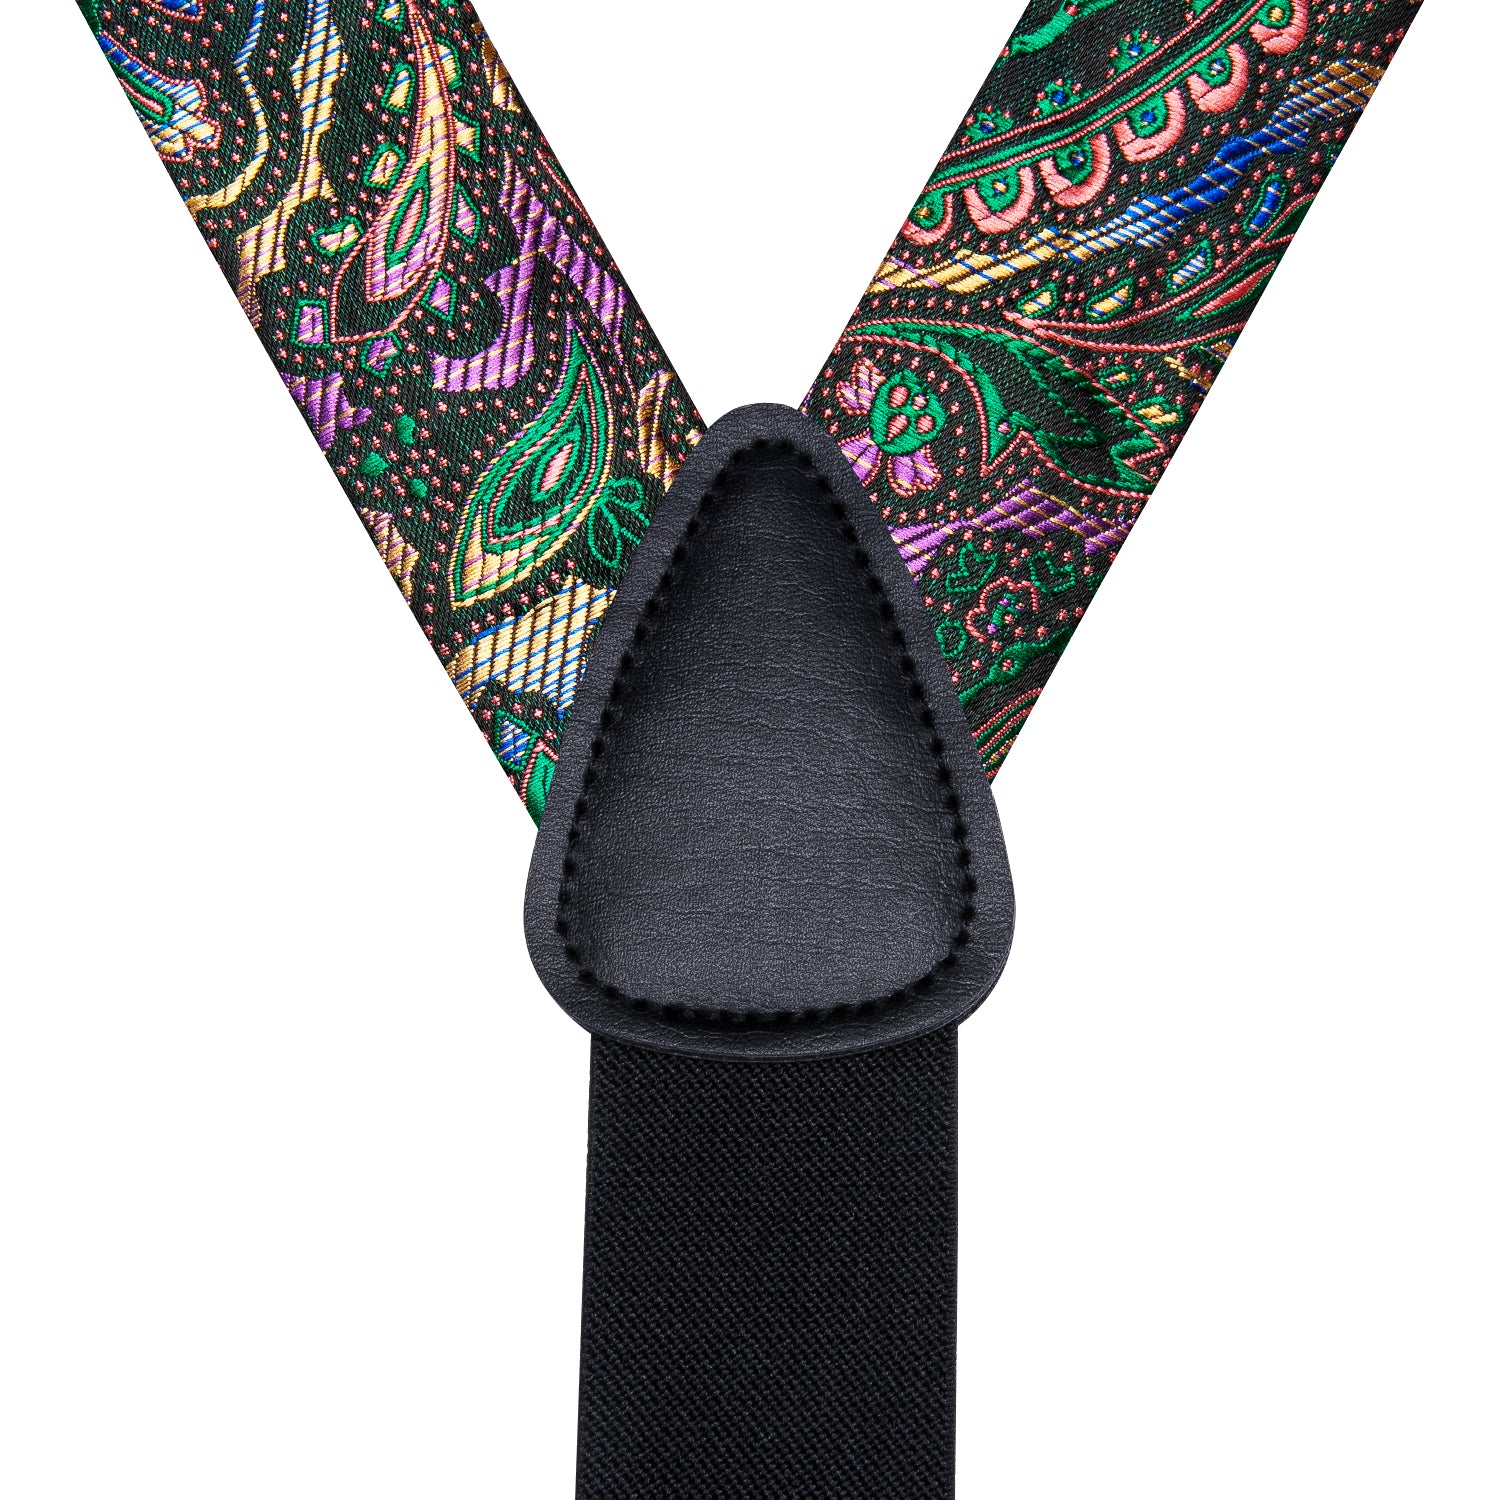 Colorful Paisley Men's Suspender Bowtie Pocket Square Cufflinks Set